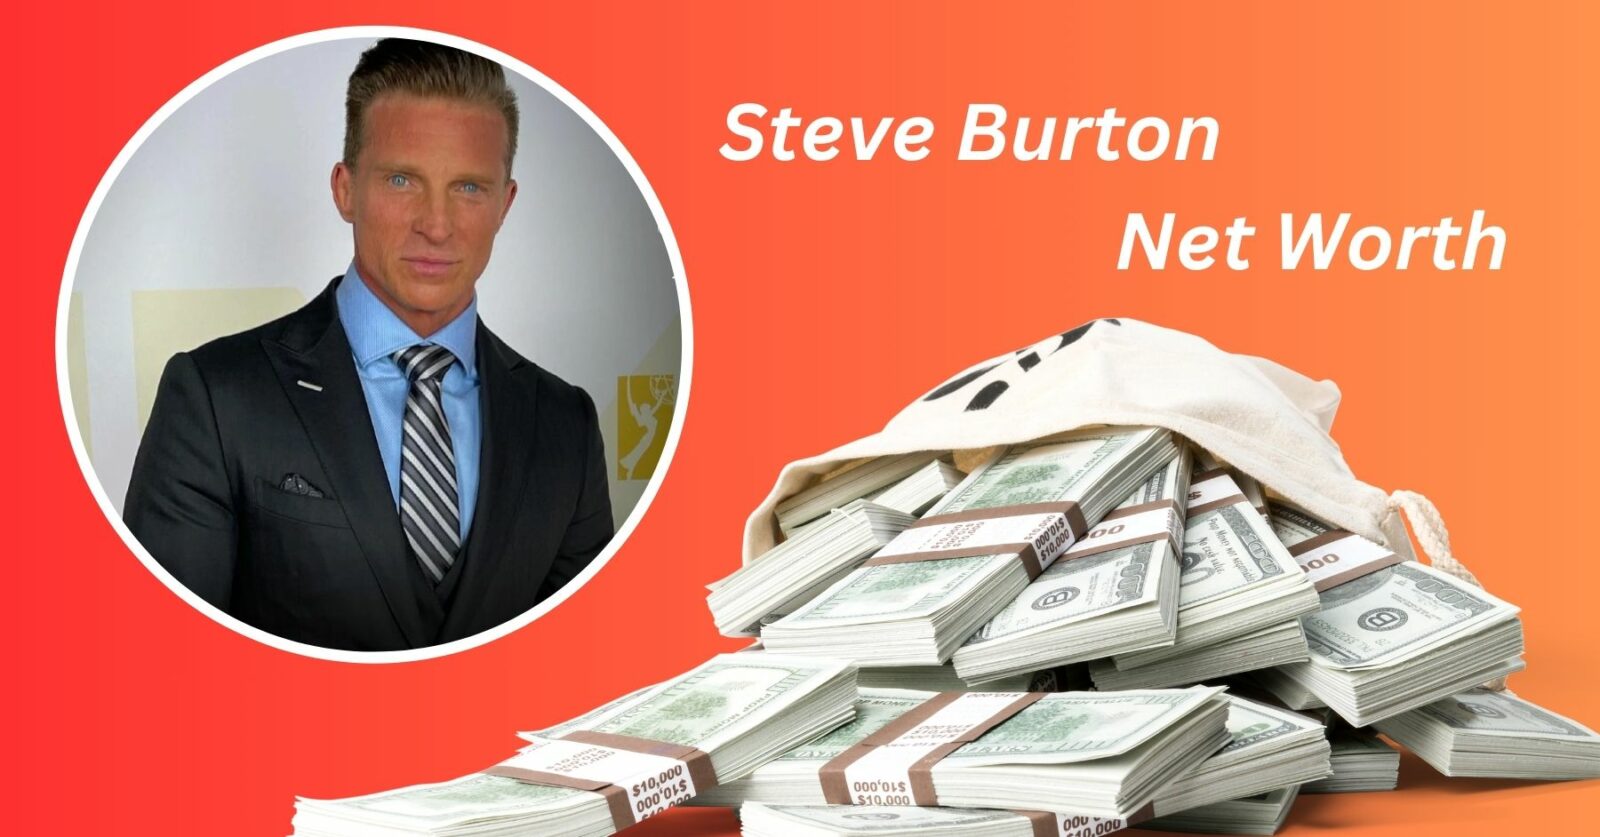 Steve Burton Net Worth